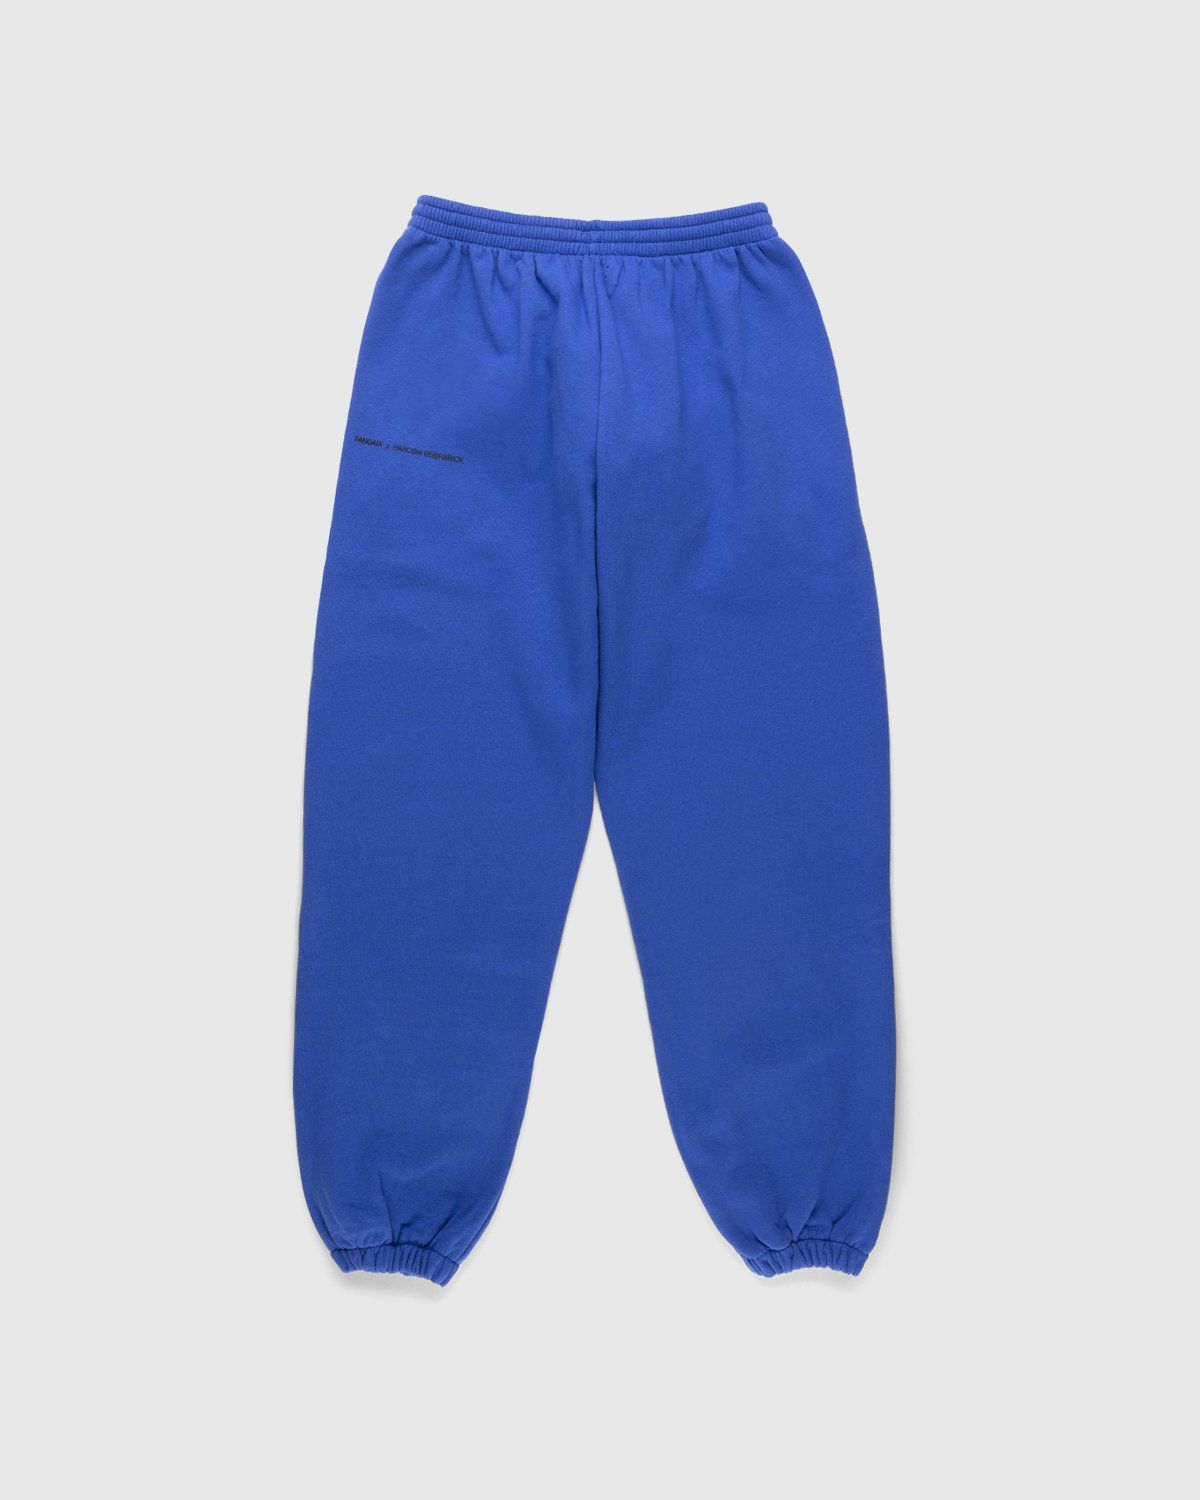 Pangaia x Haroshi – Be@rbrick Recycled Cotton Track Pants Blue - Pants - Blue - Image 2